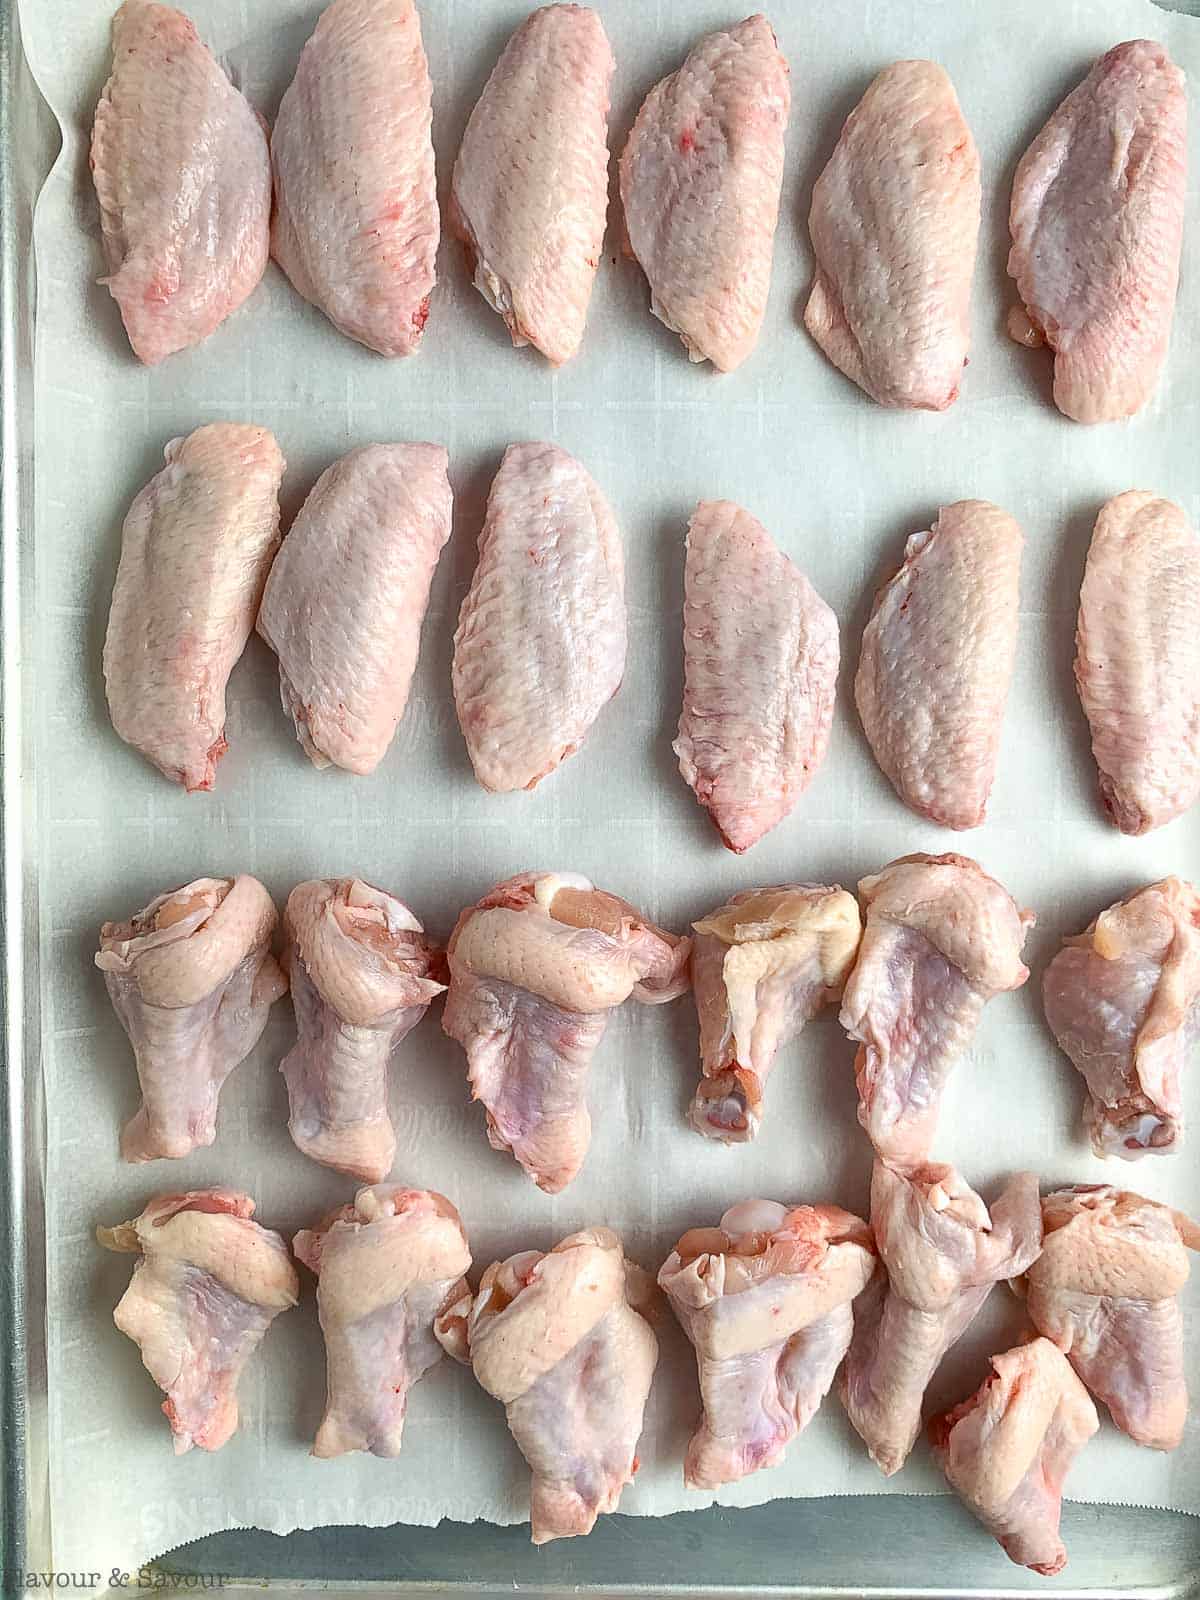 Raw chicken wings on a baking sheet.